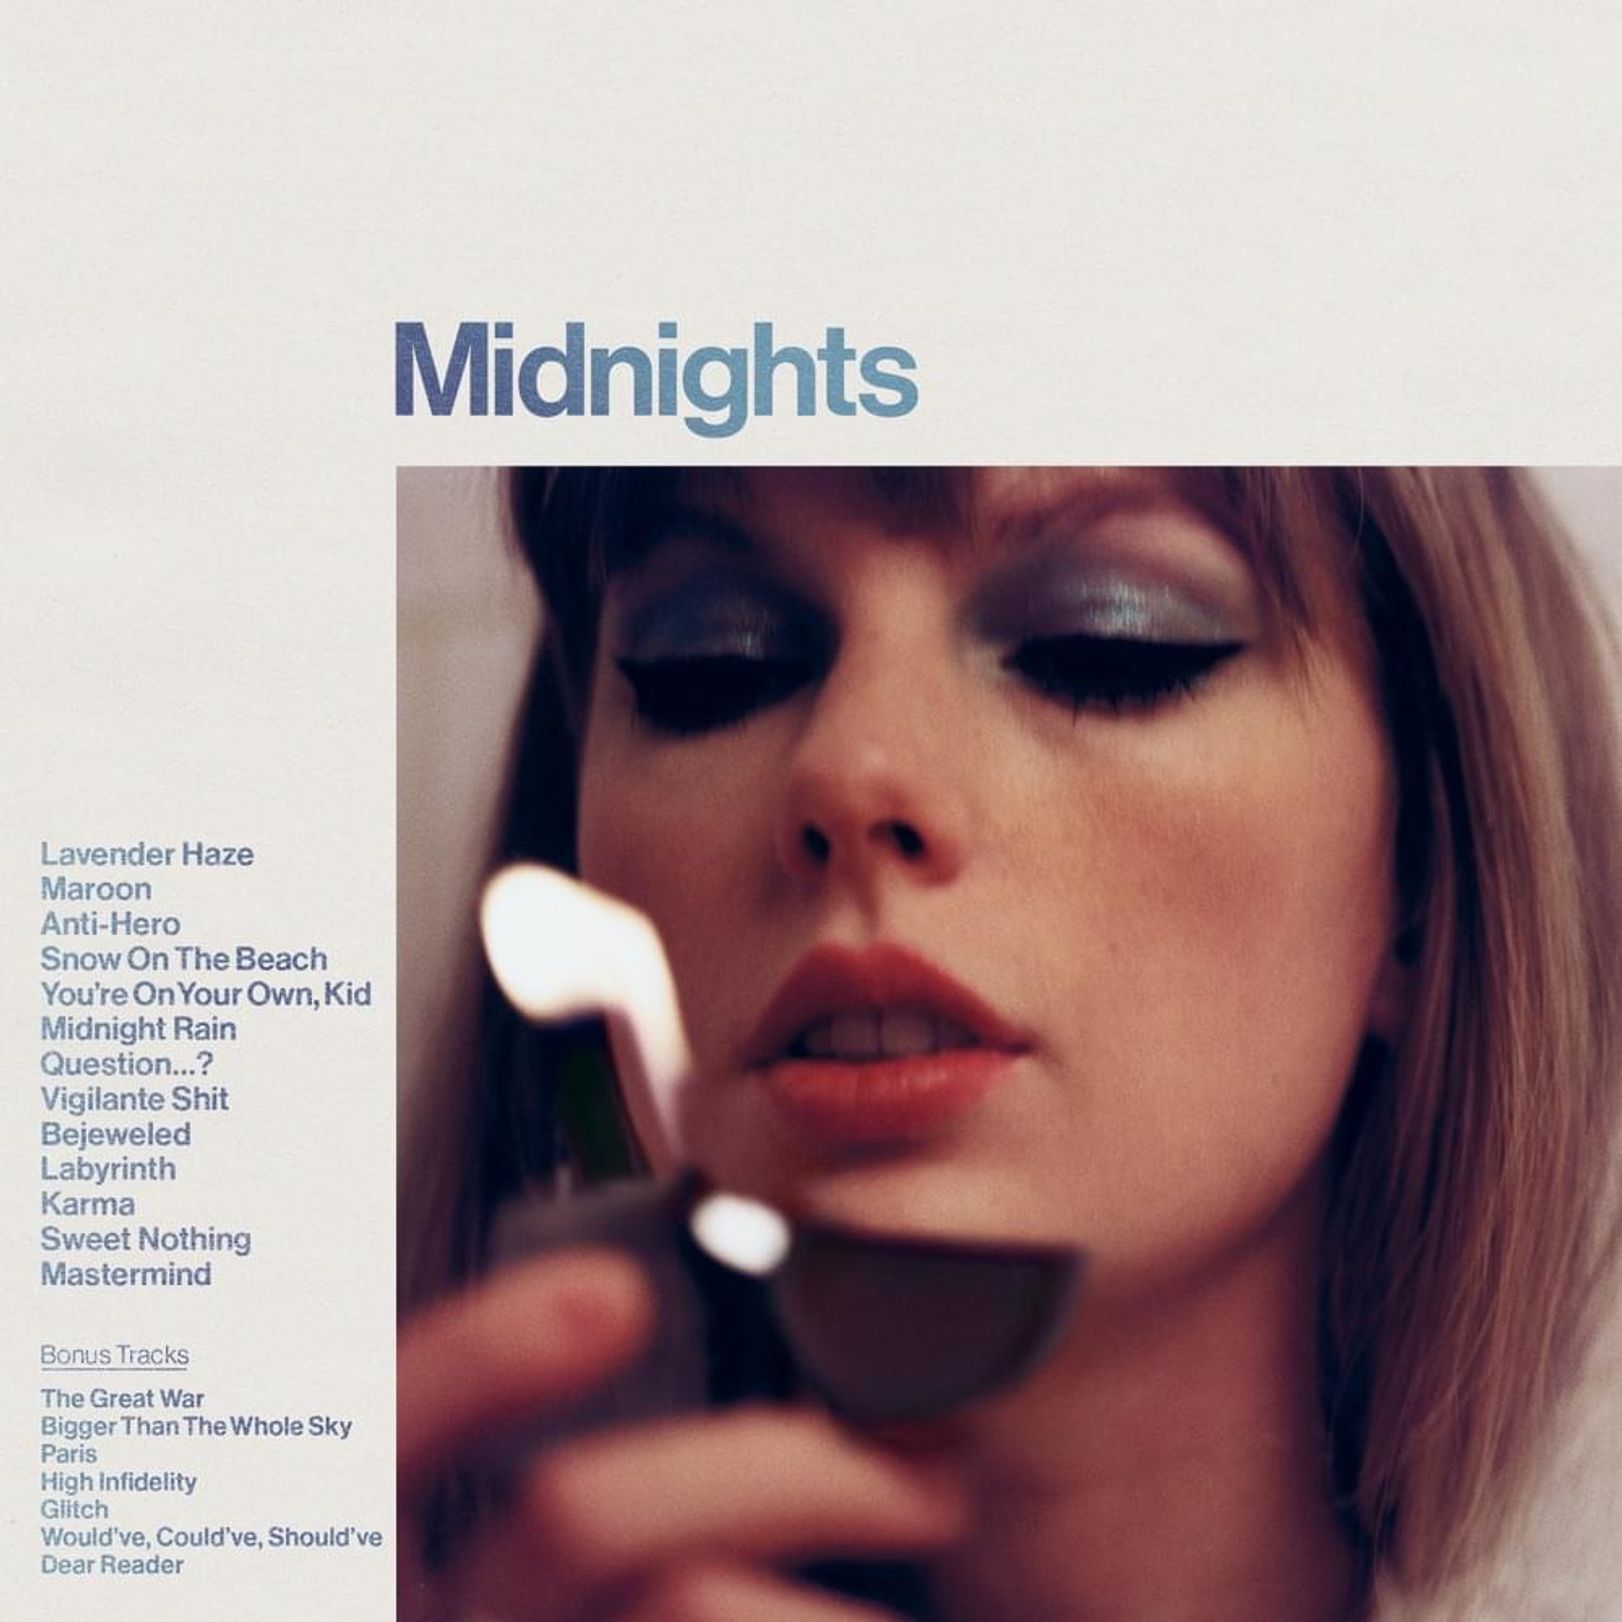 Midnights: 3am Edition (Republic Records, 2022)